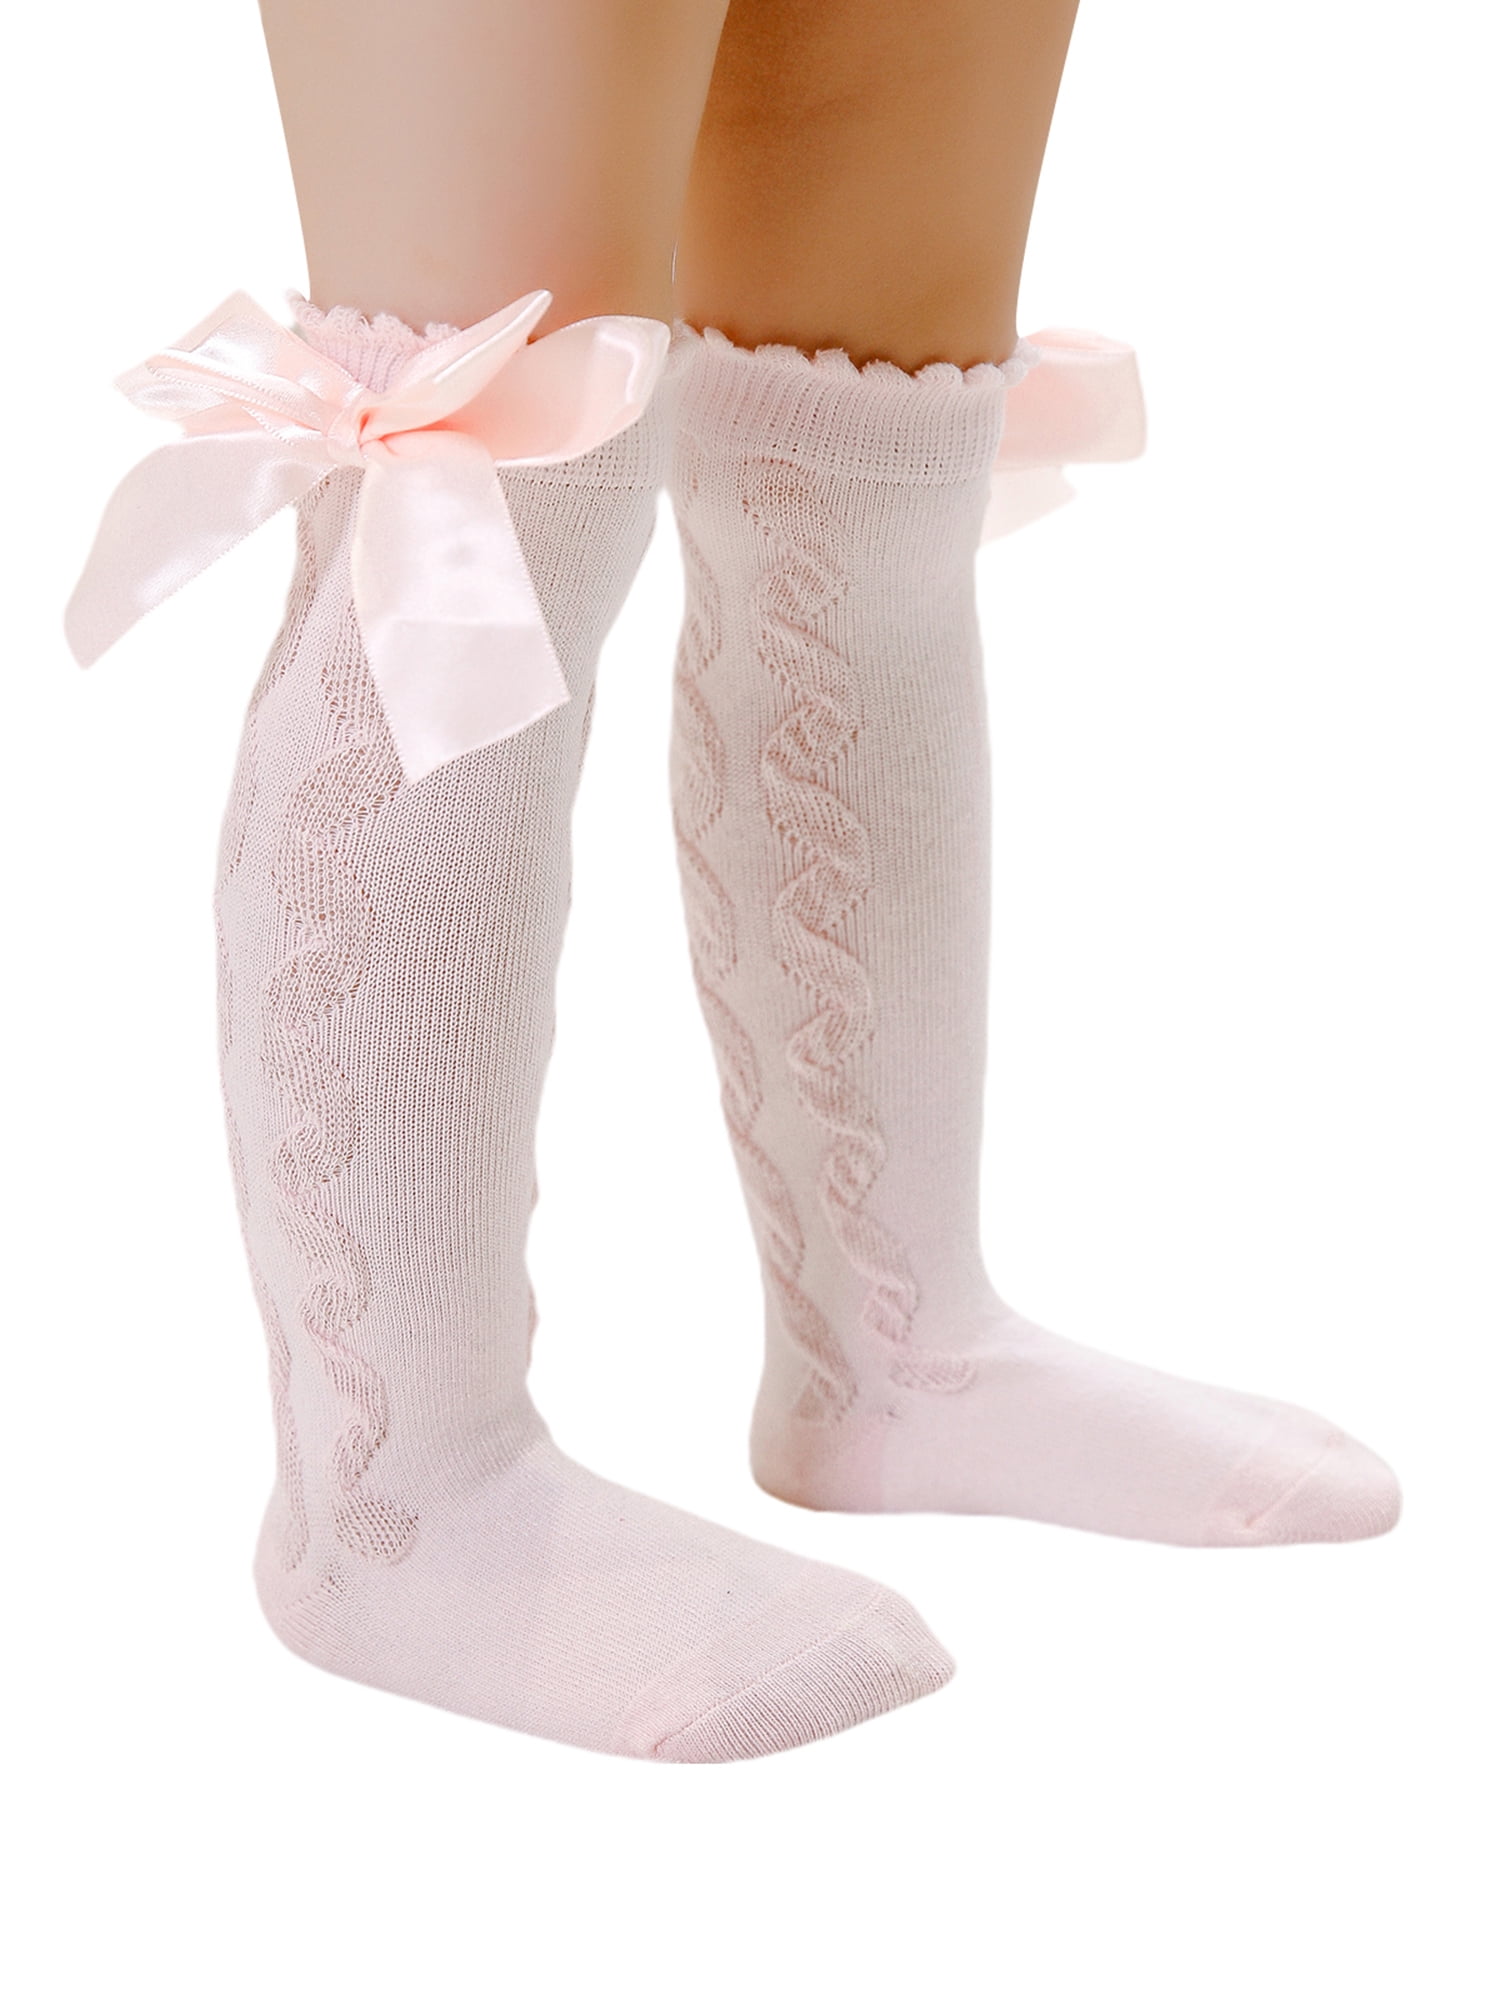 High Elasticity Girl Cotton Knee High Socks Uniform Pink Flowers And Butterfly Women Tube Socks 